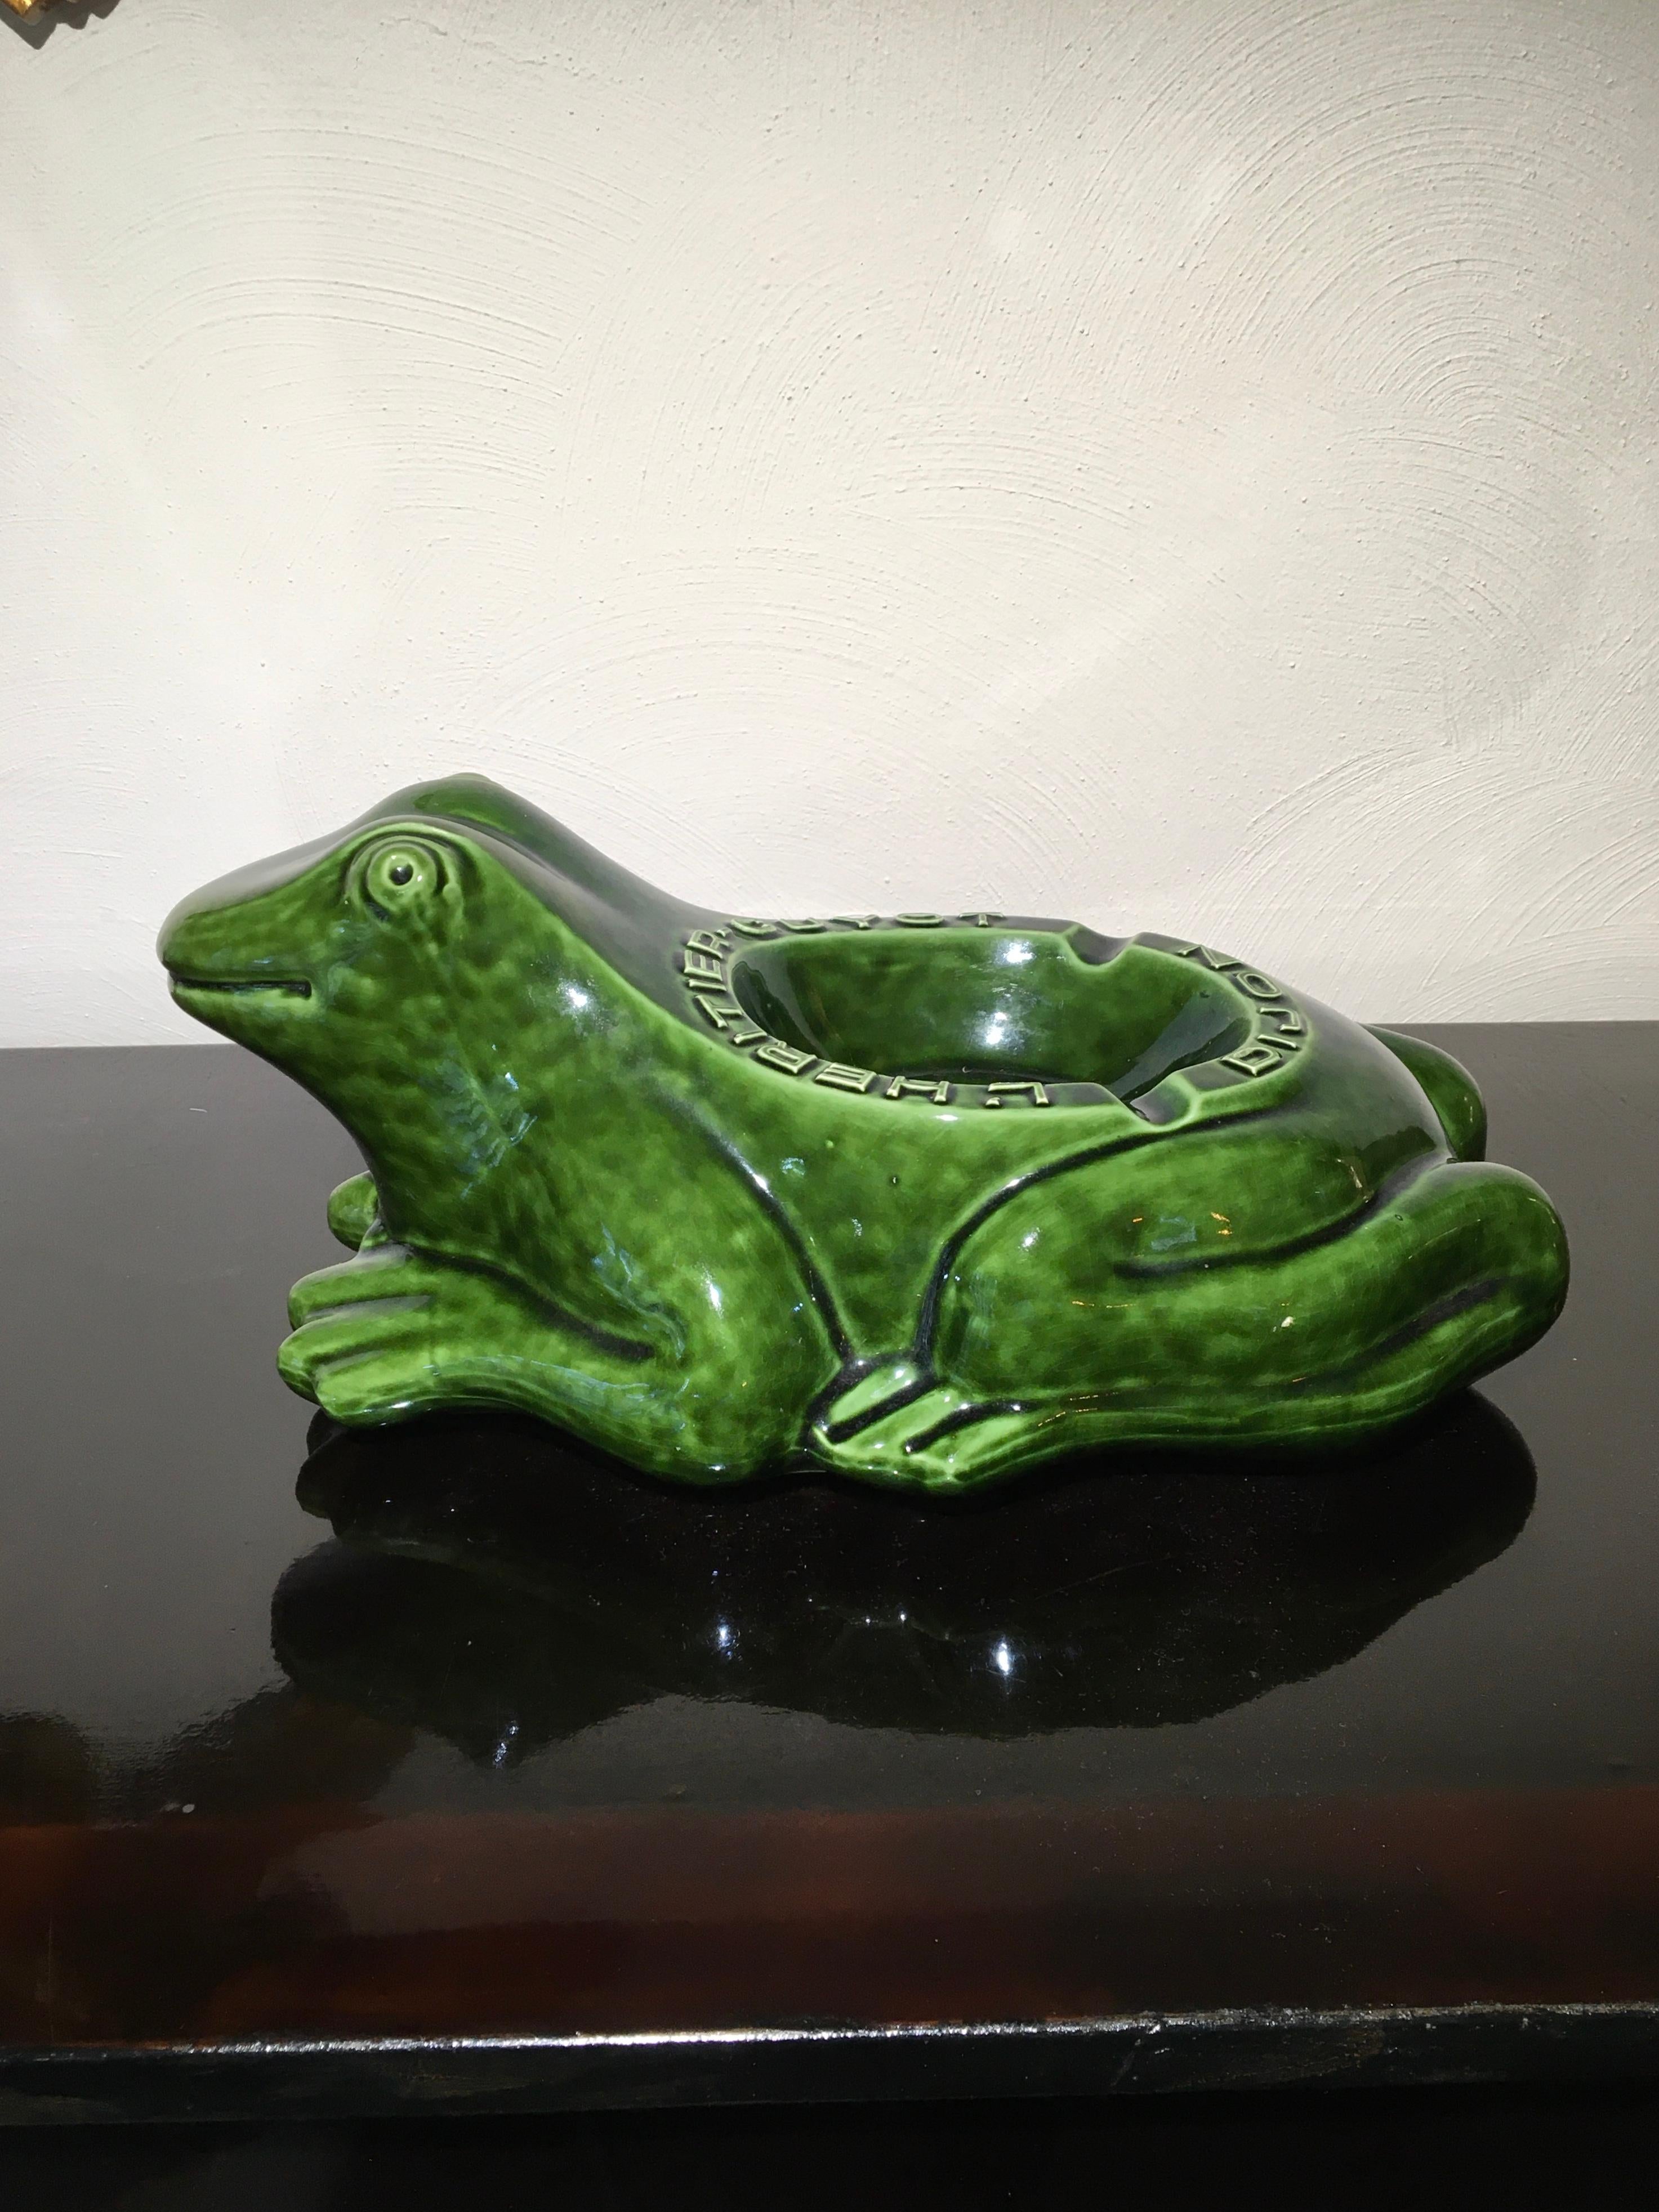 Porcelaine Grande sculpture de grenouille en porcelaine, grenouille publicitaire française L'Heritier Guyot  en vente